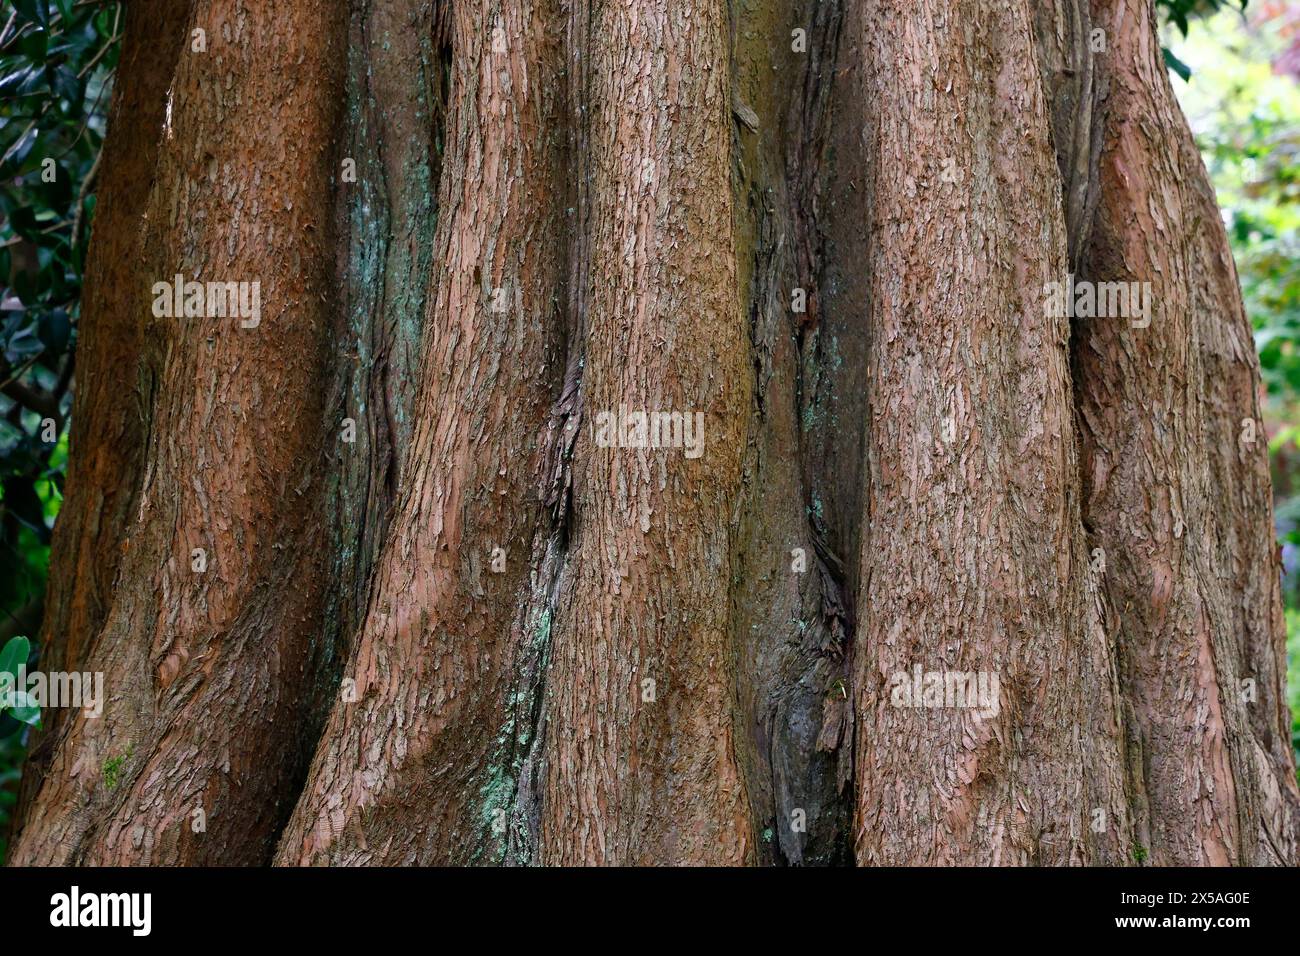 Closeup of the orange-brown bark of the dawn redwood conifer tree Metasequoia glyptostroboides. Stock Photo